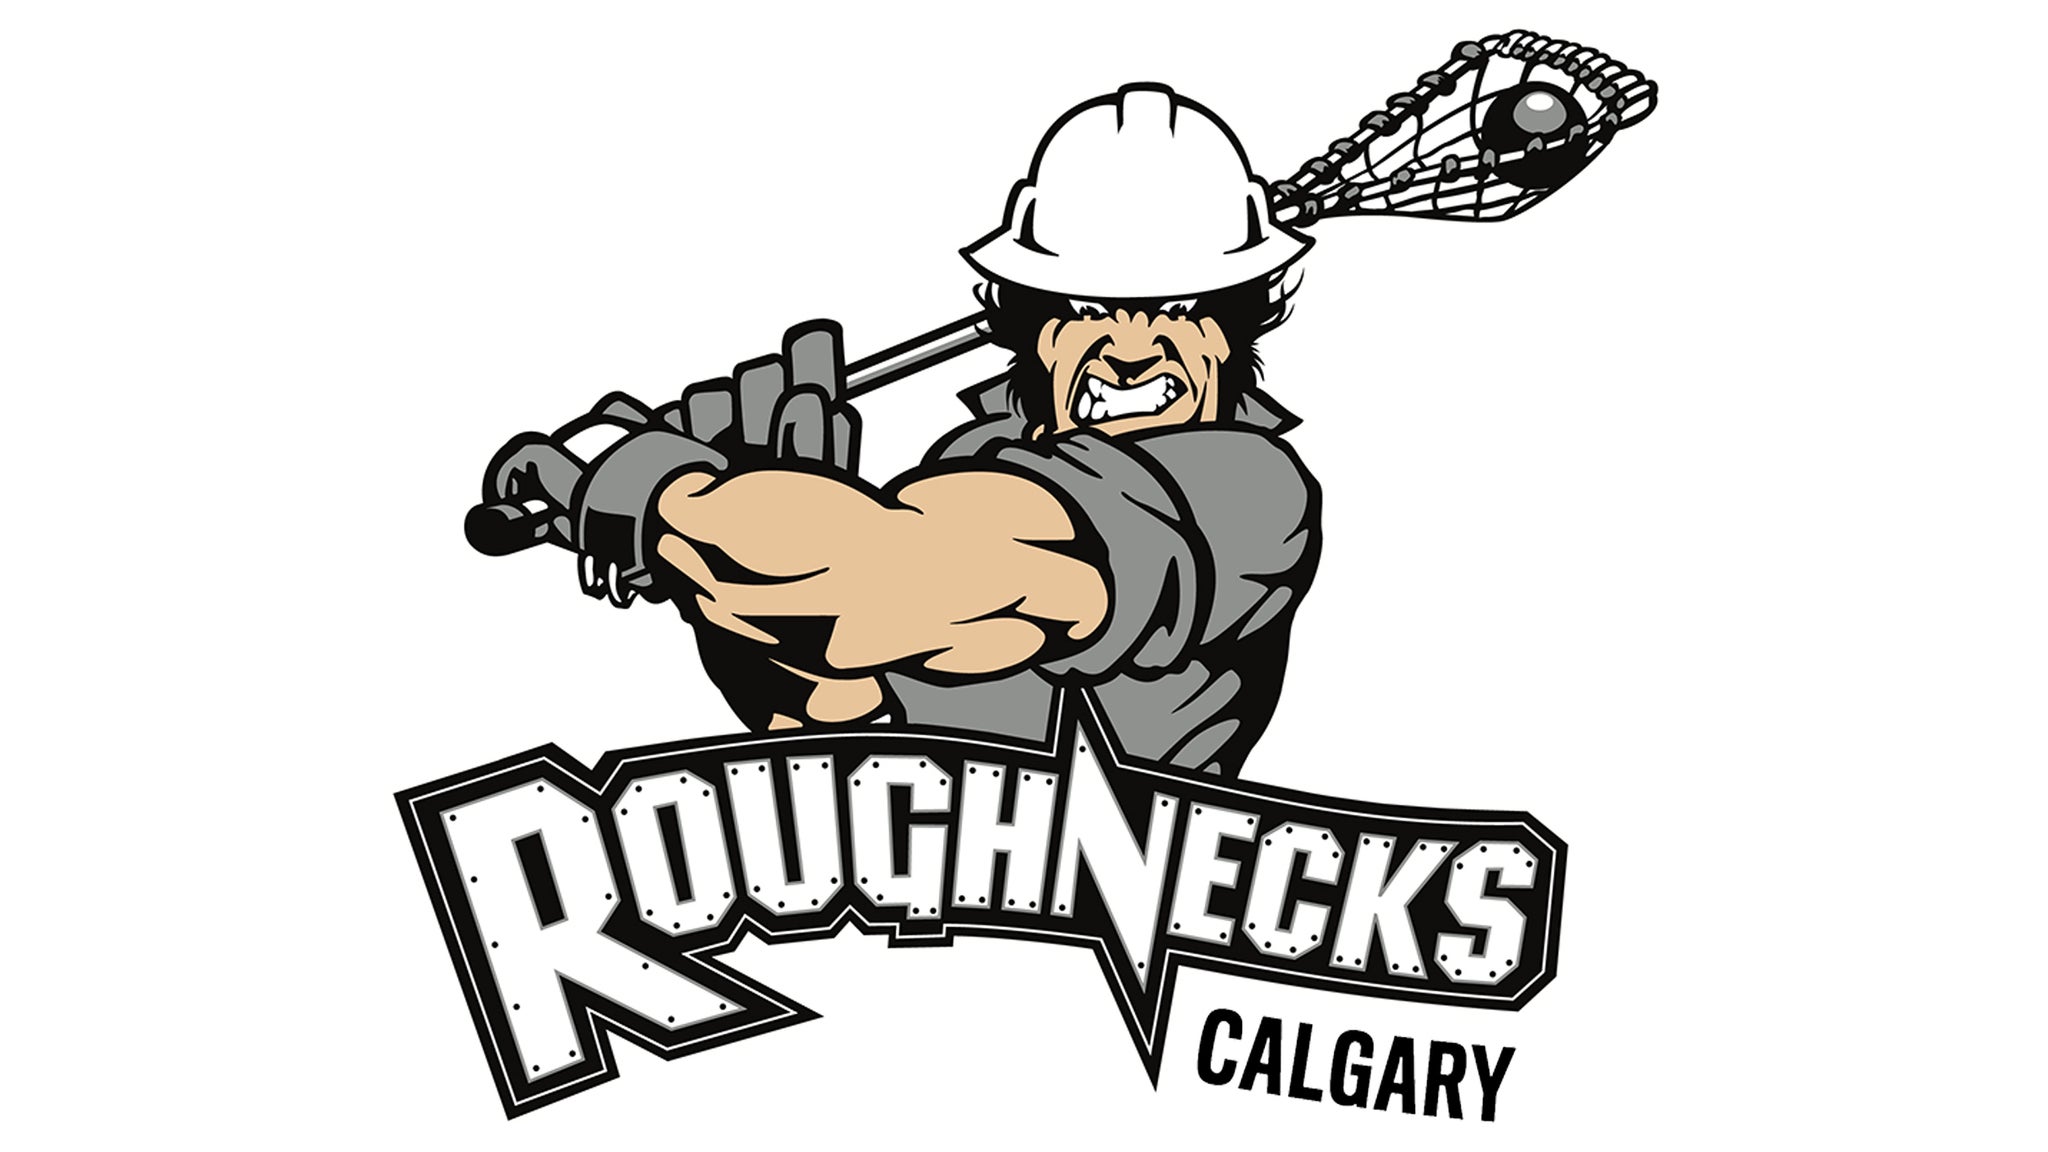 Calgary Roughnecks vs. San Diego Seals in Calgary promo photo for Classroom Lacross Initiative presale offer code